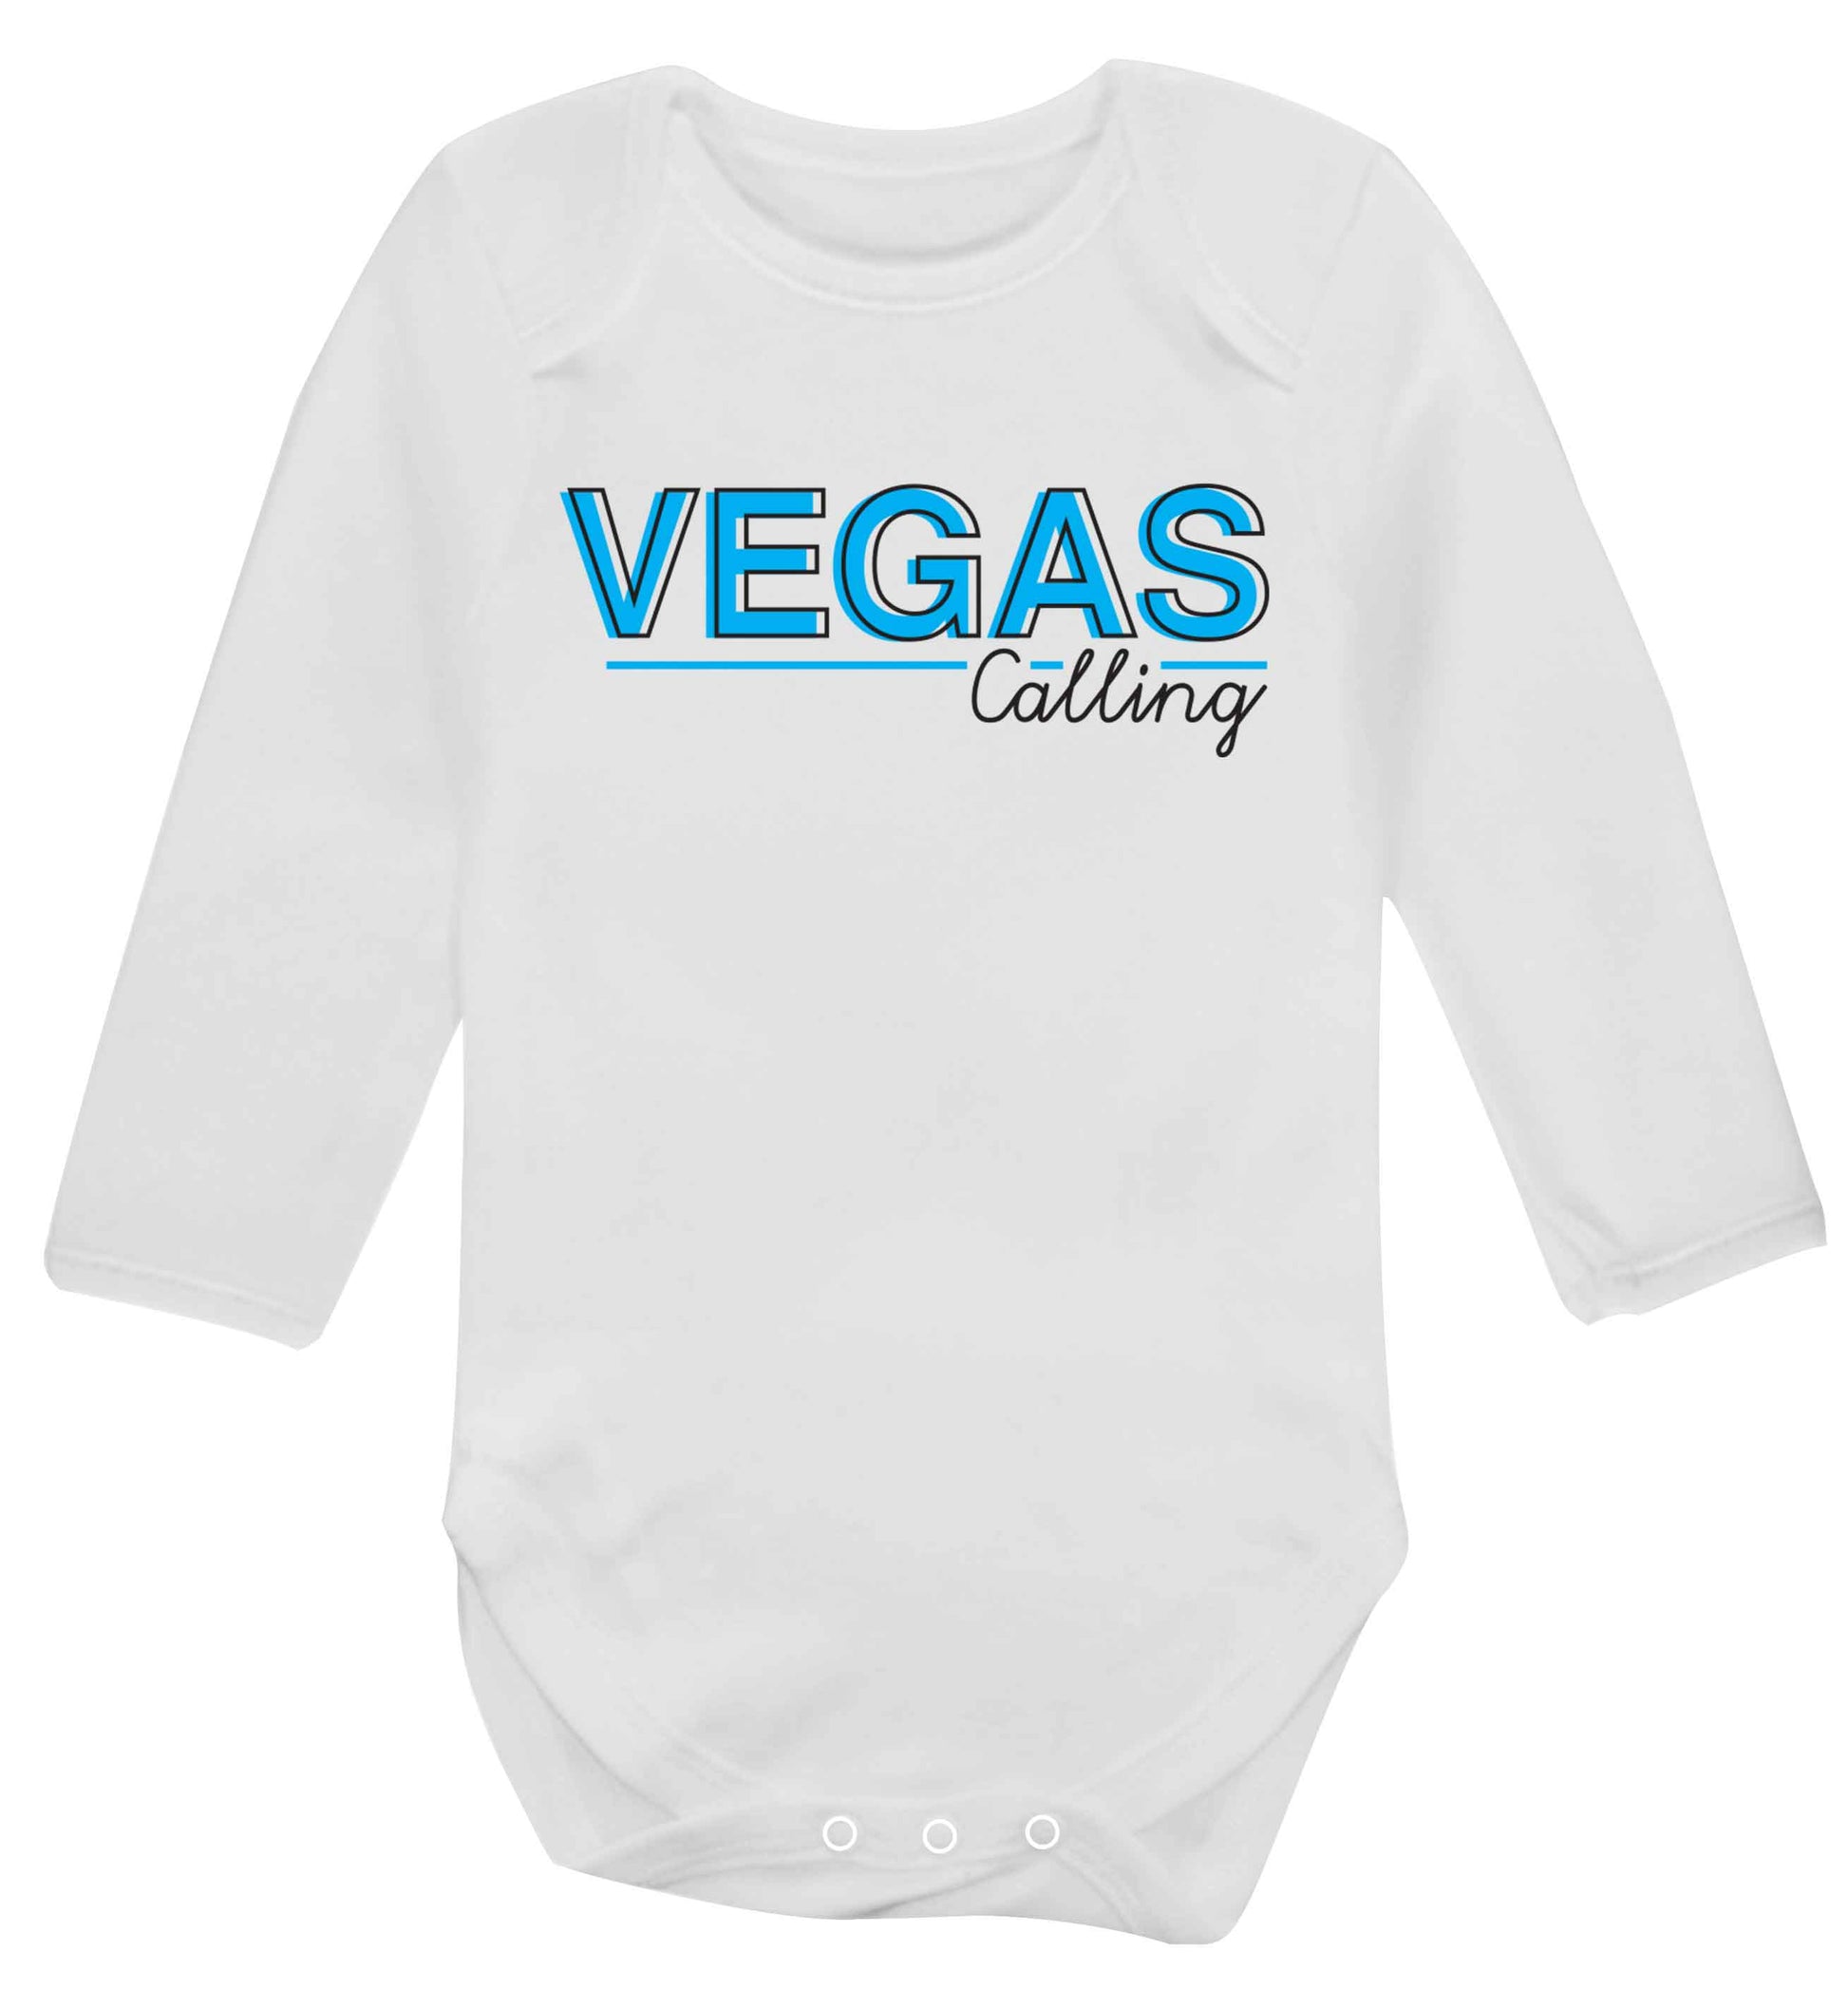 Vegas calling Baby Vest long sleeved white 6-12 months